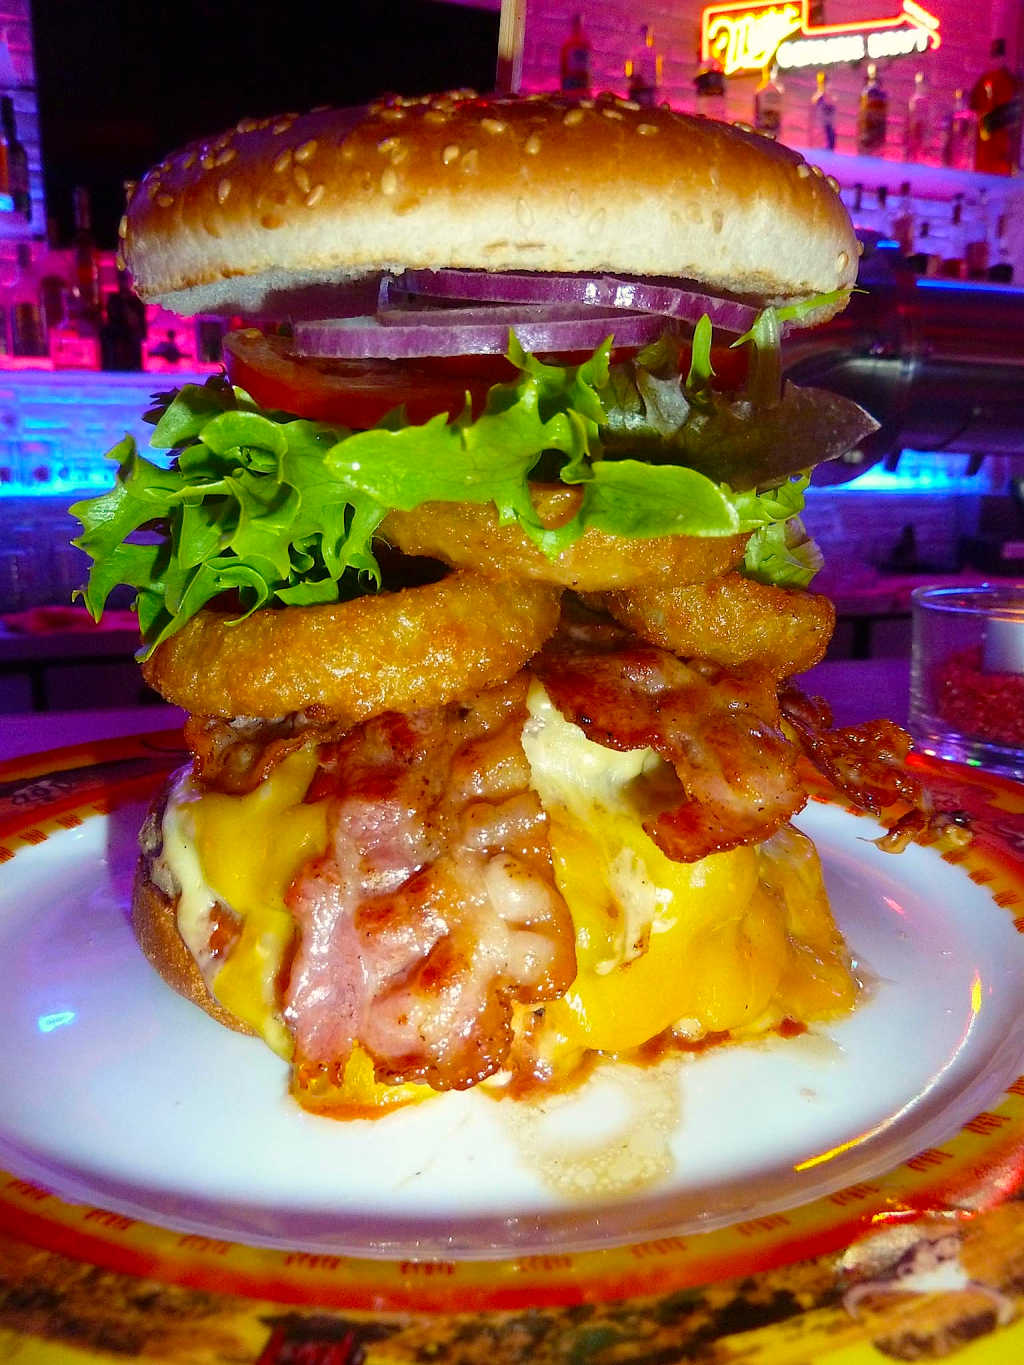 Lecker, lecker, lecker..unser Supreme Burger the Master of the Homemade Burgers!